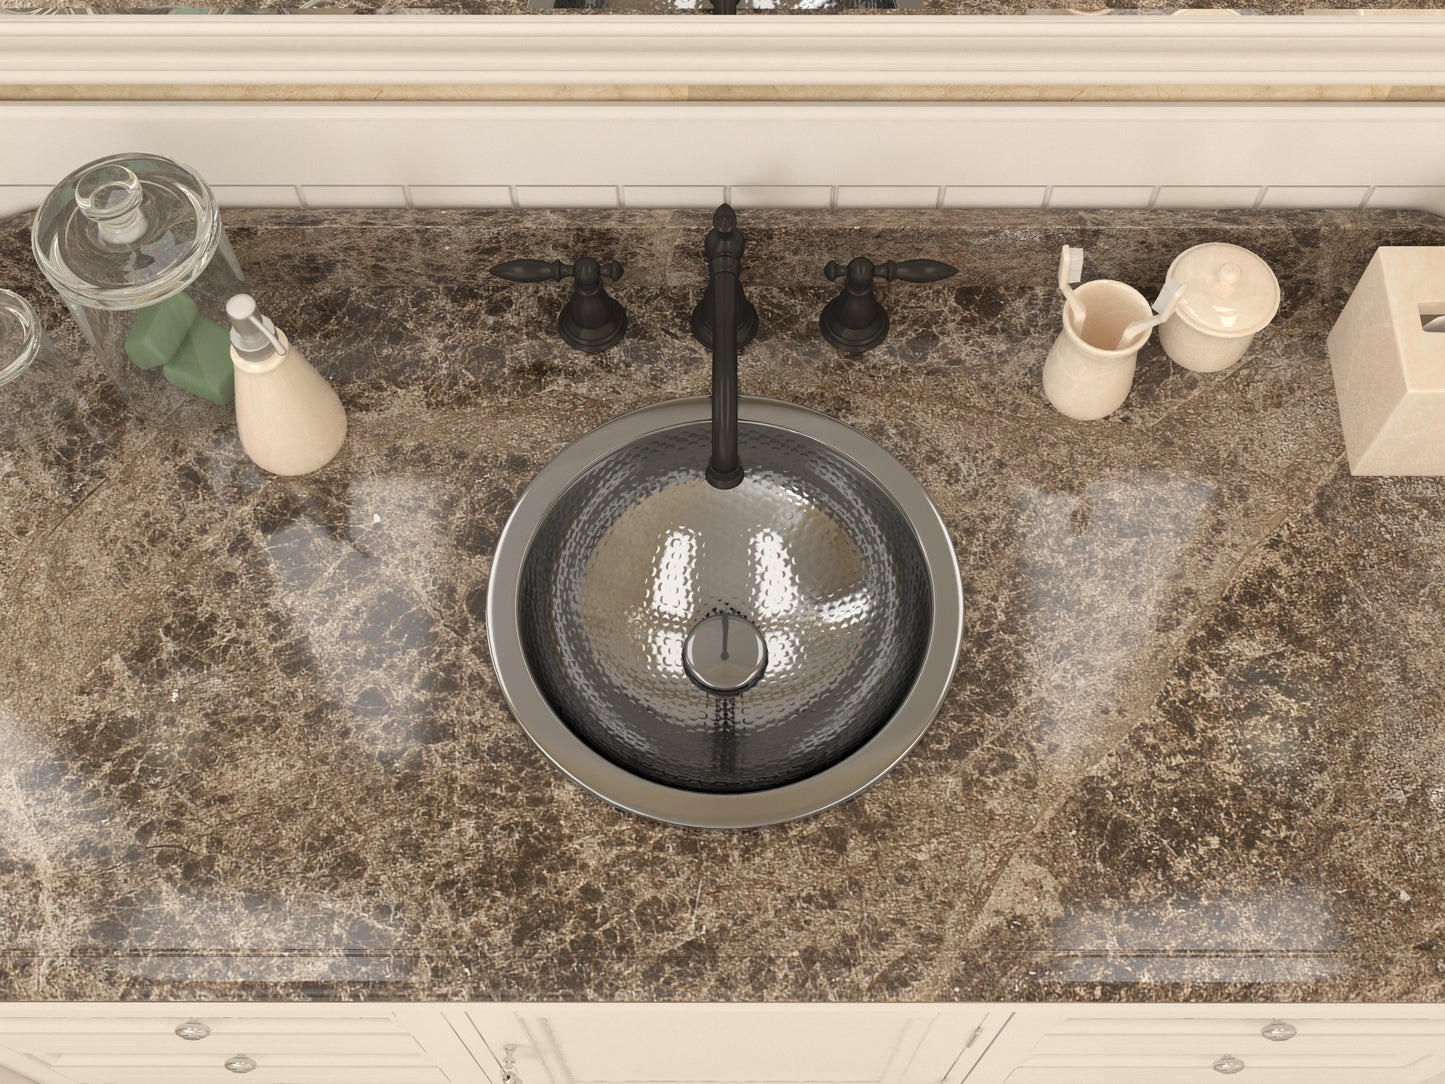 Celestial 14 in. Handmade Drop-in Oval Bathroom Sink with Overflow in Hammered Nickel - Luxe Bathroom Vanities